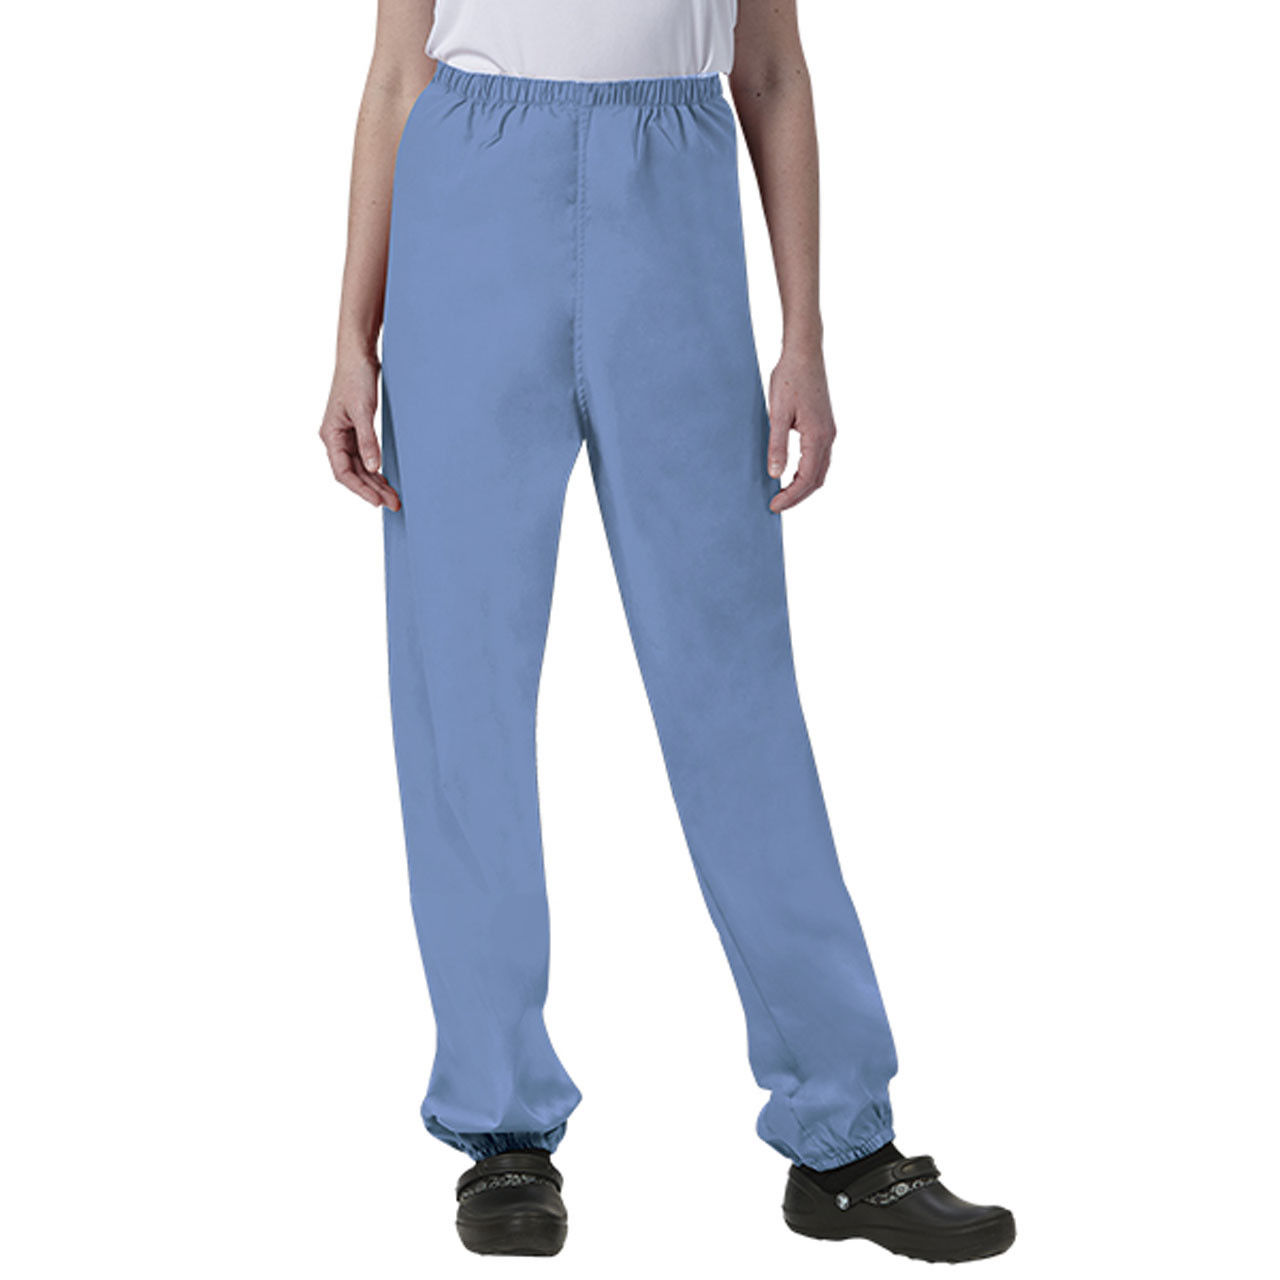 Do polyester elastic waistband wholesalers supply Fashion Seal's scrub pants?